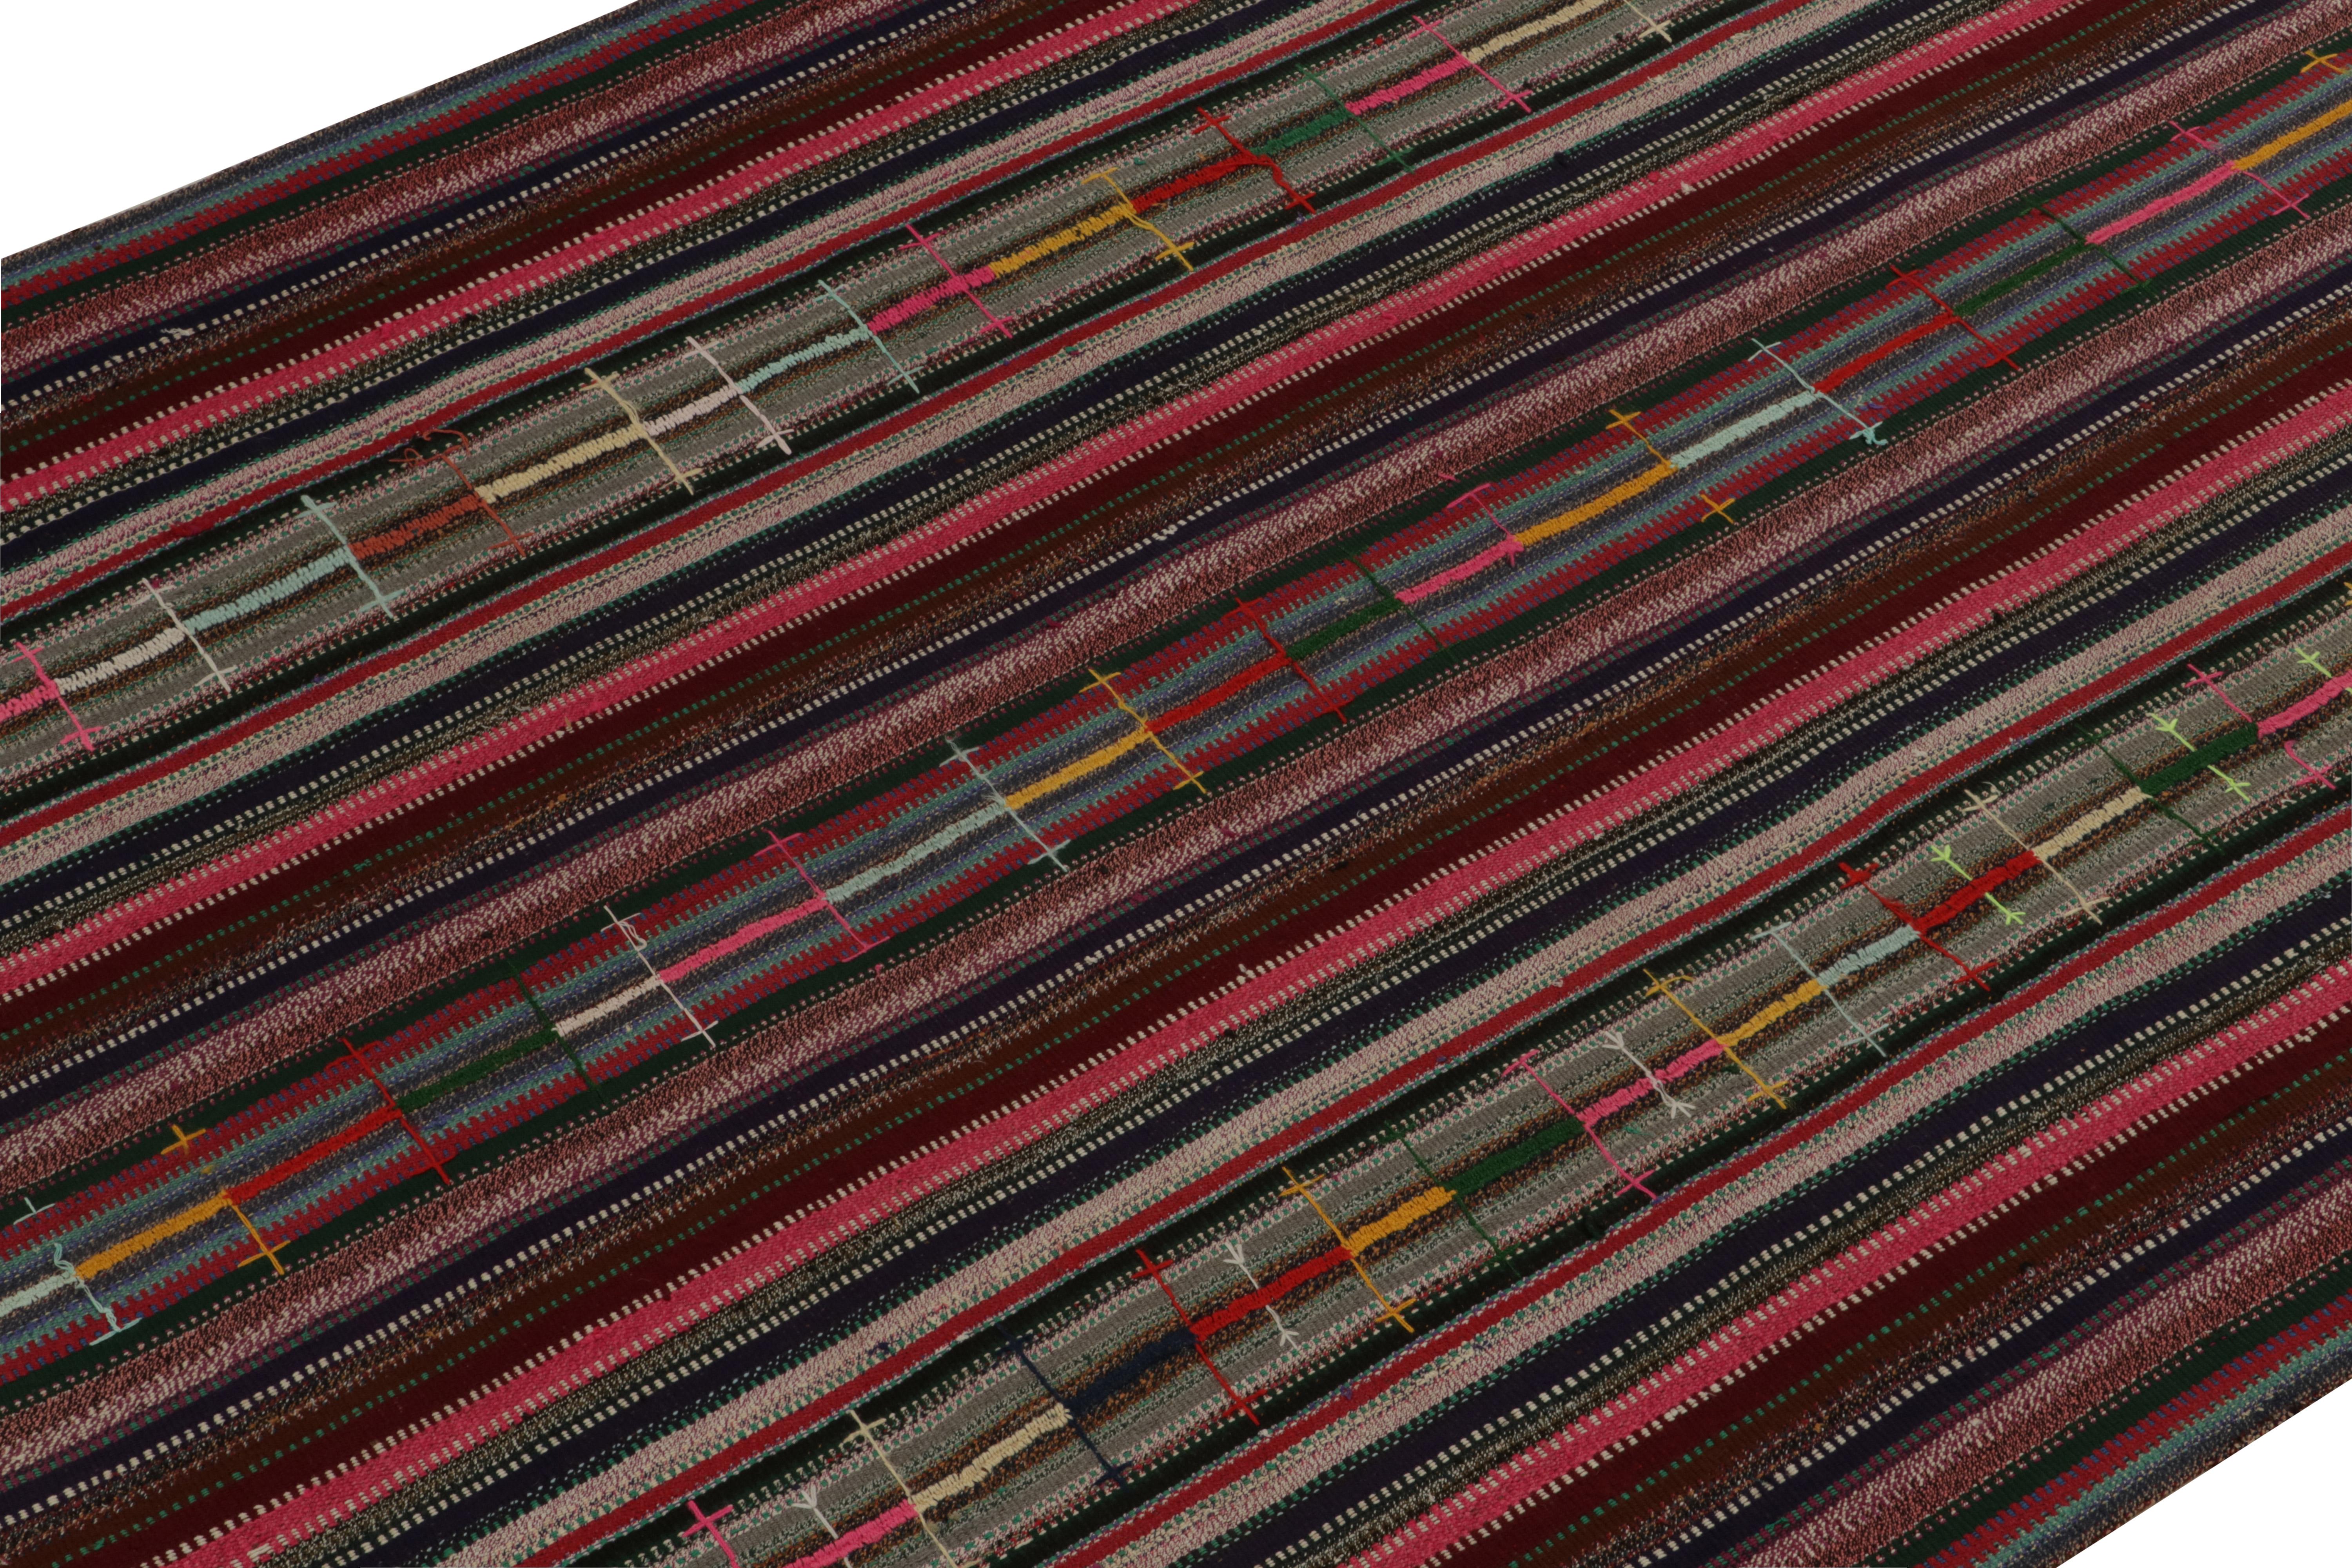 Turkish 1950s Vintage Chaput Kilim Rug in Multicolor Striped Patterns, by Rug & Kilim For Sale